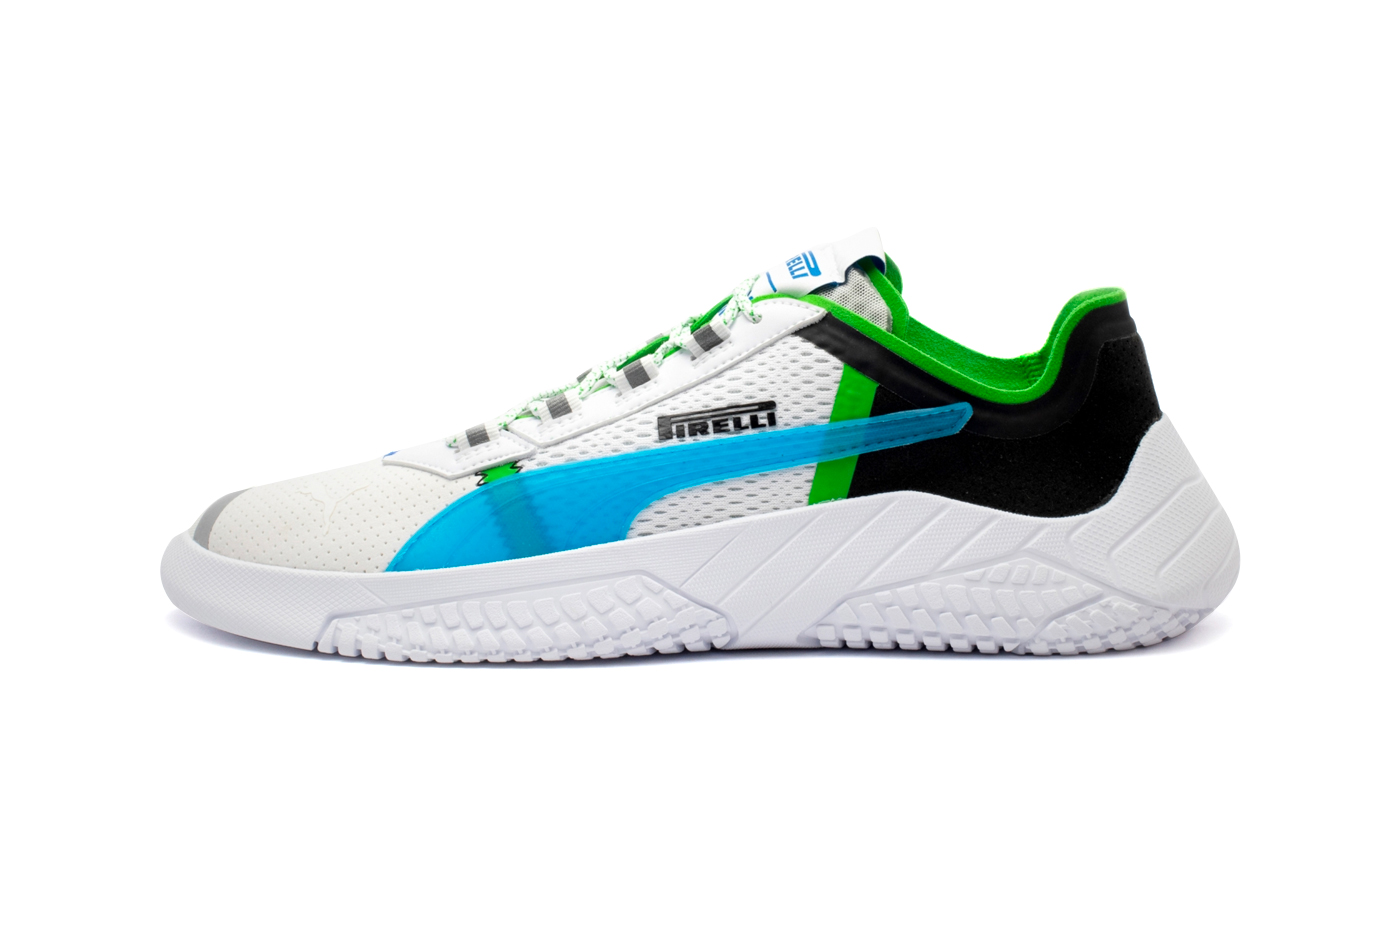 puma formula 1 racing shoes